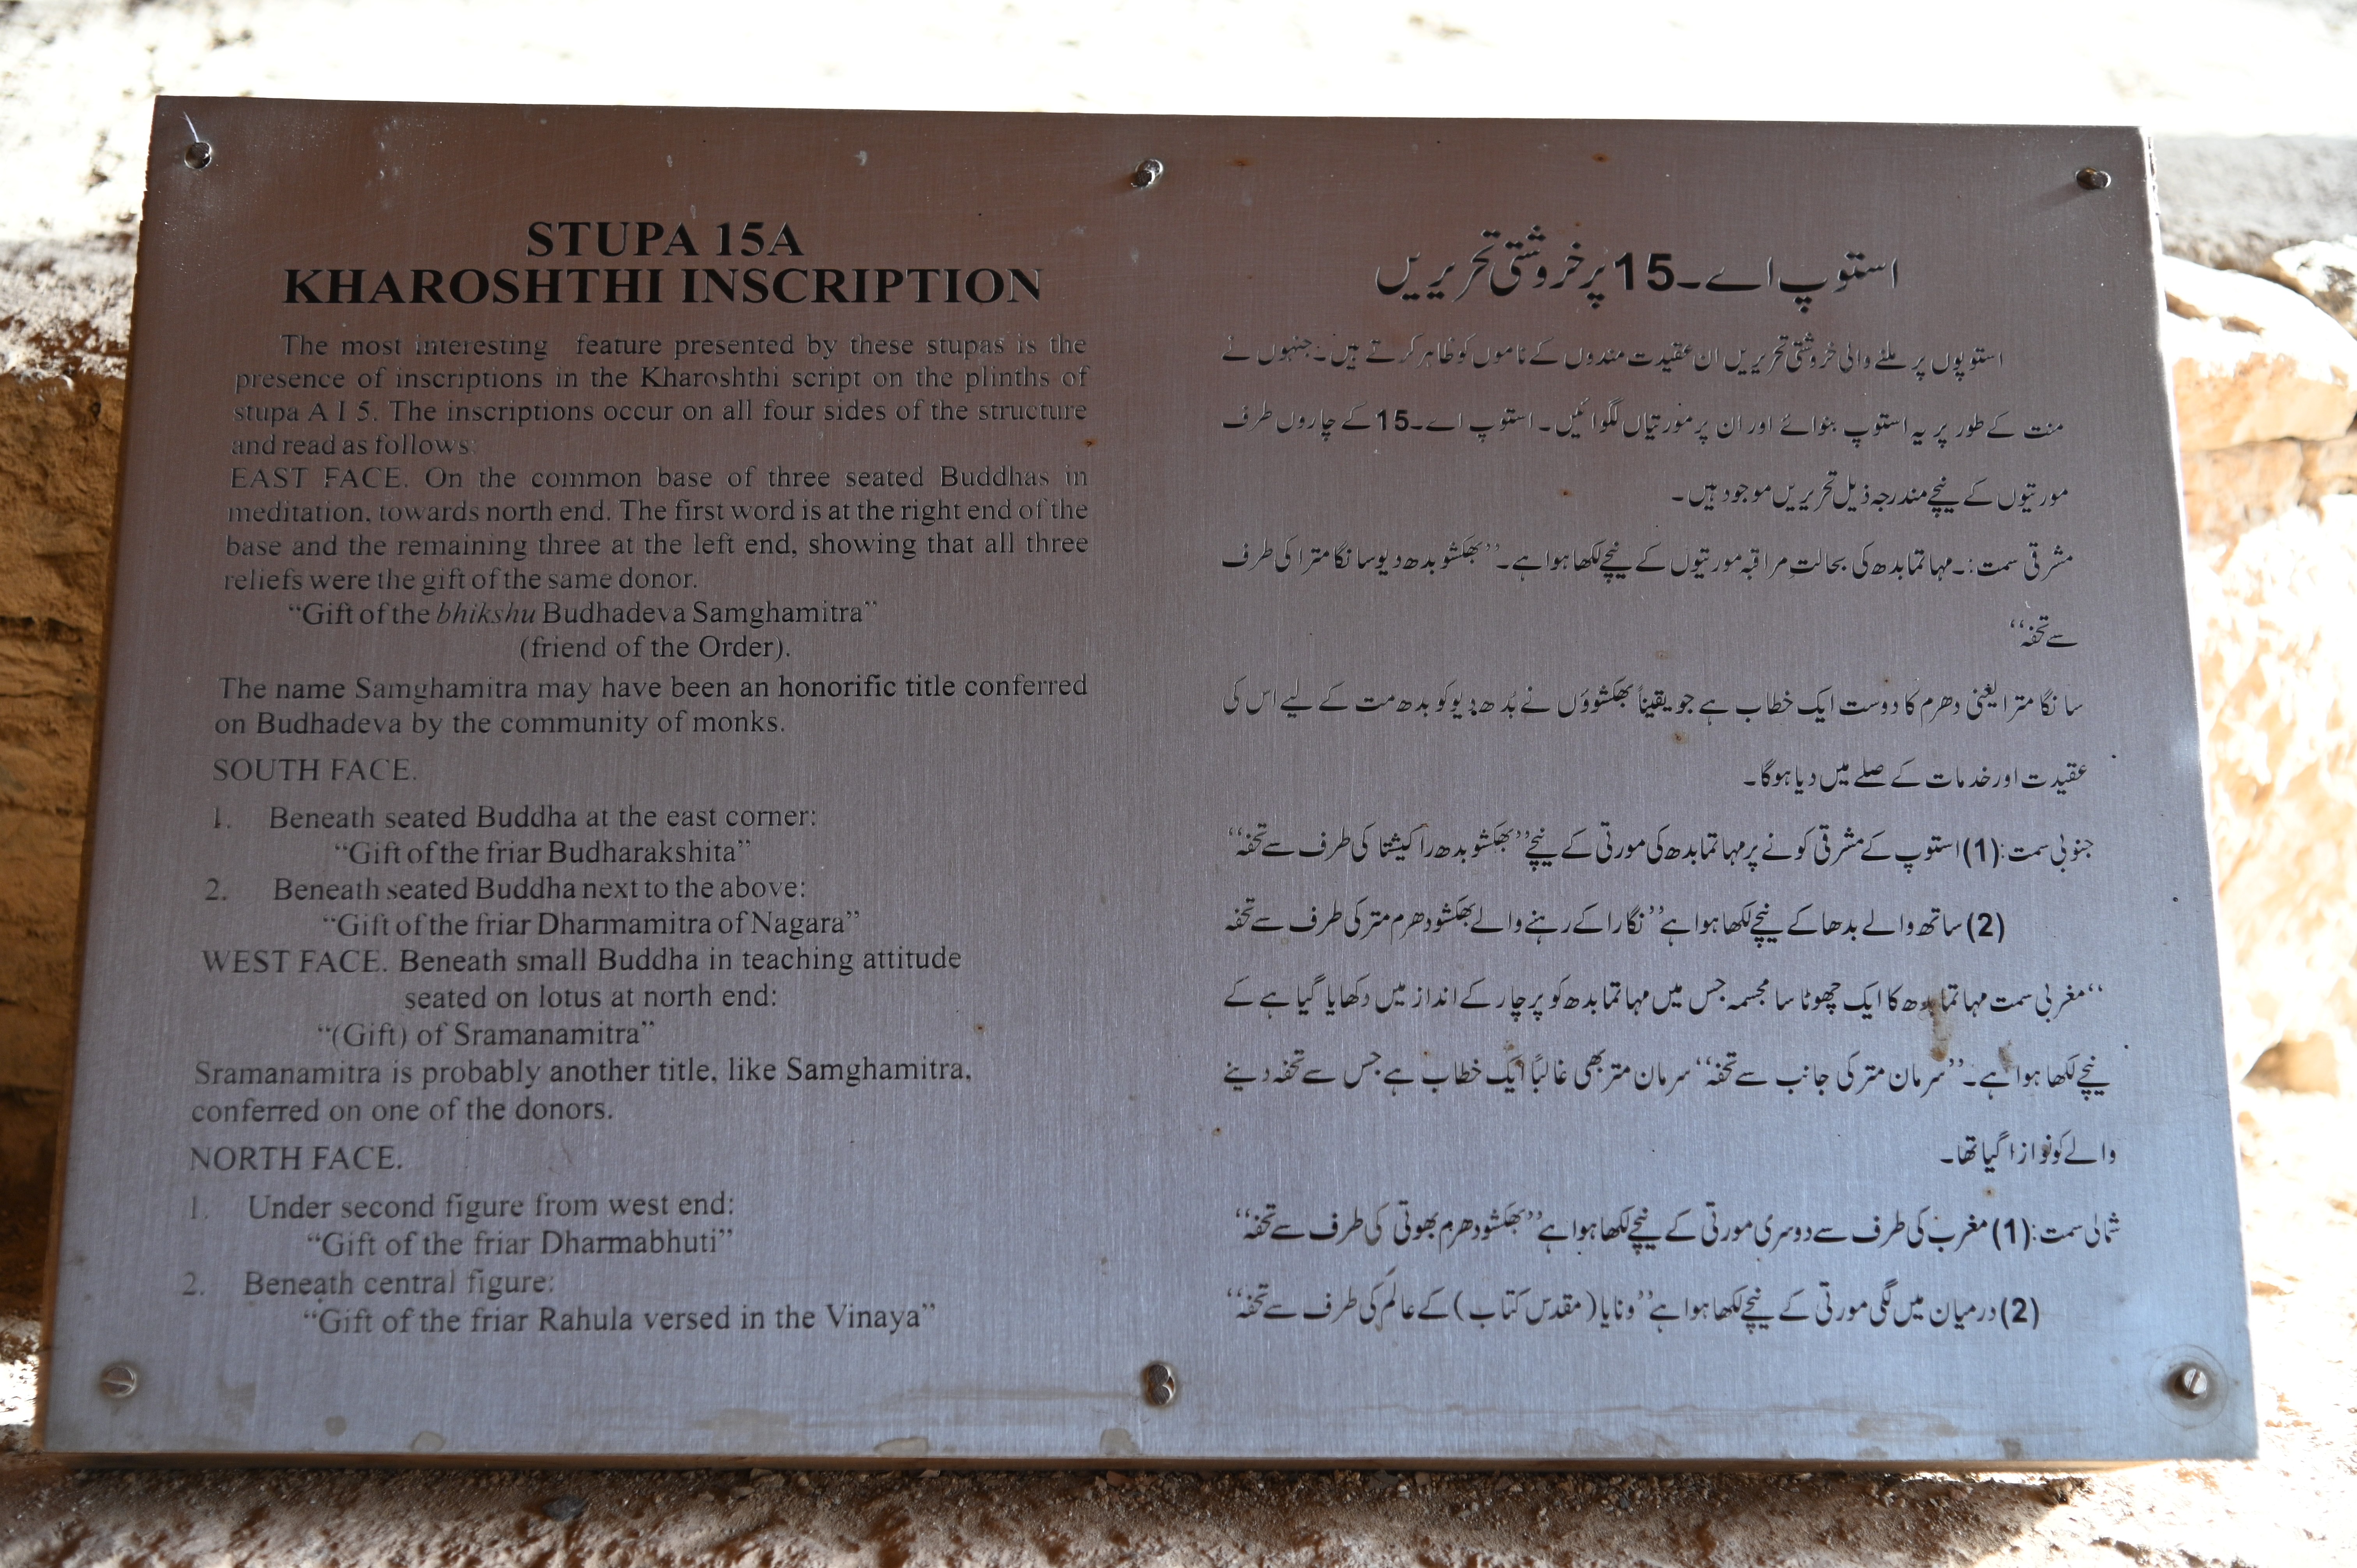 The information board regarding Kharoshthi inscription